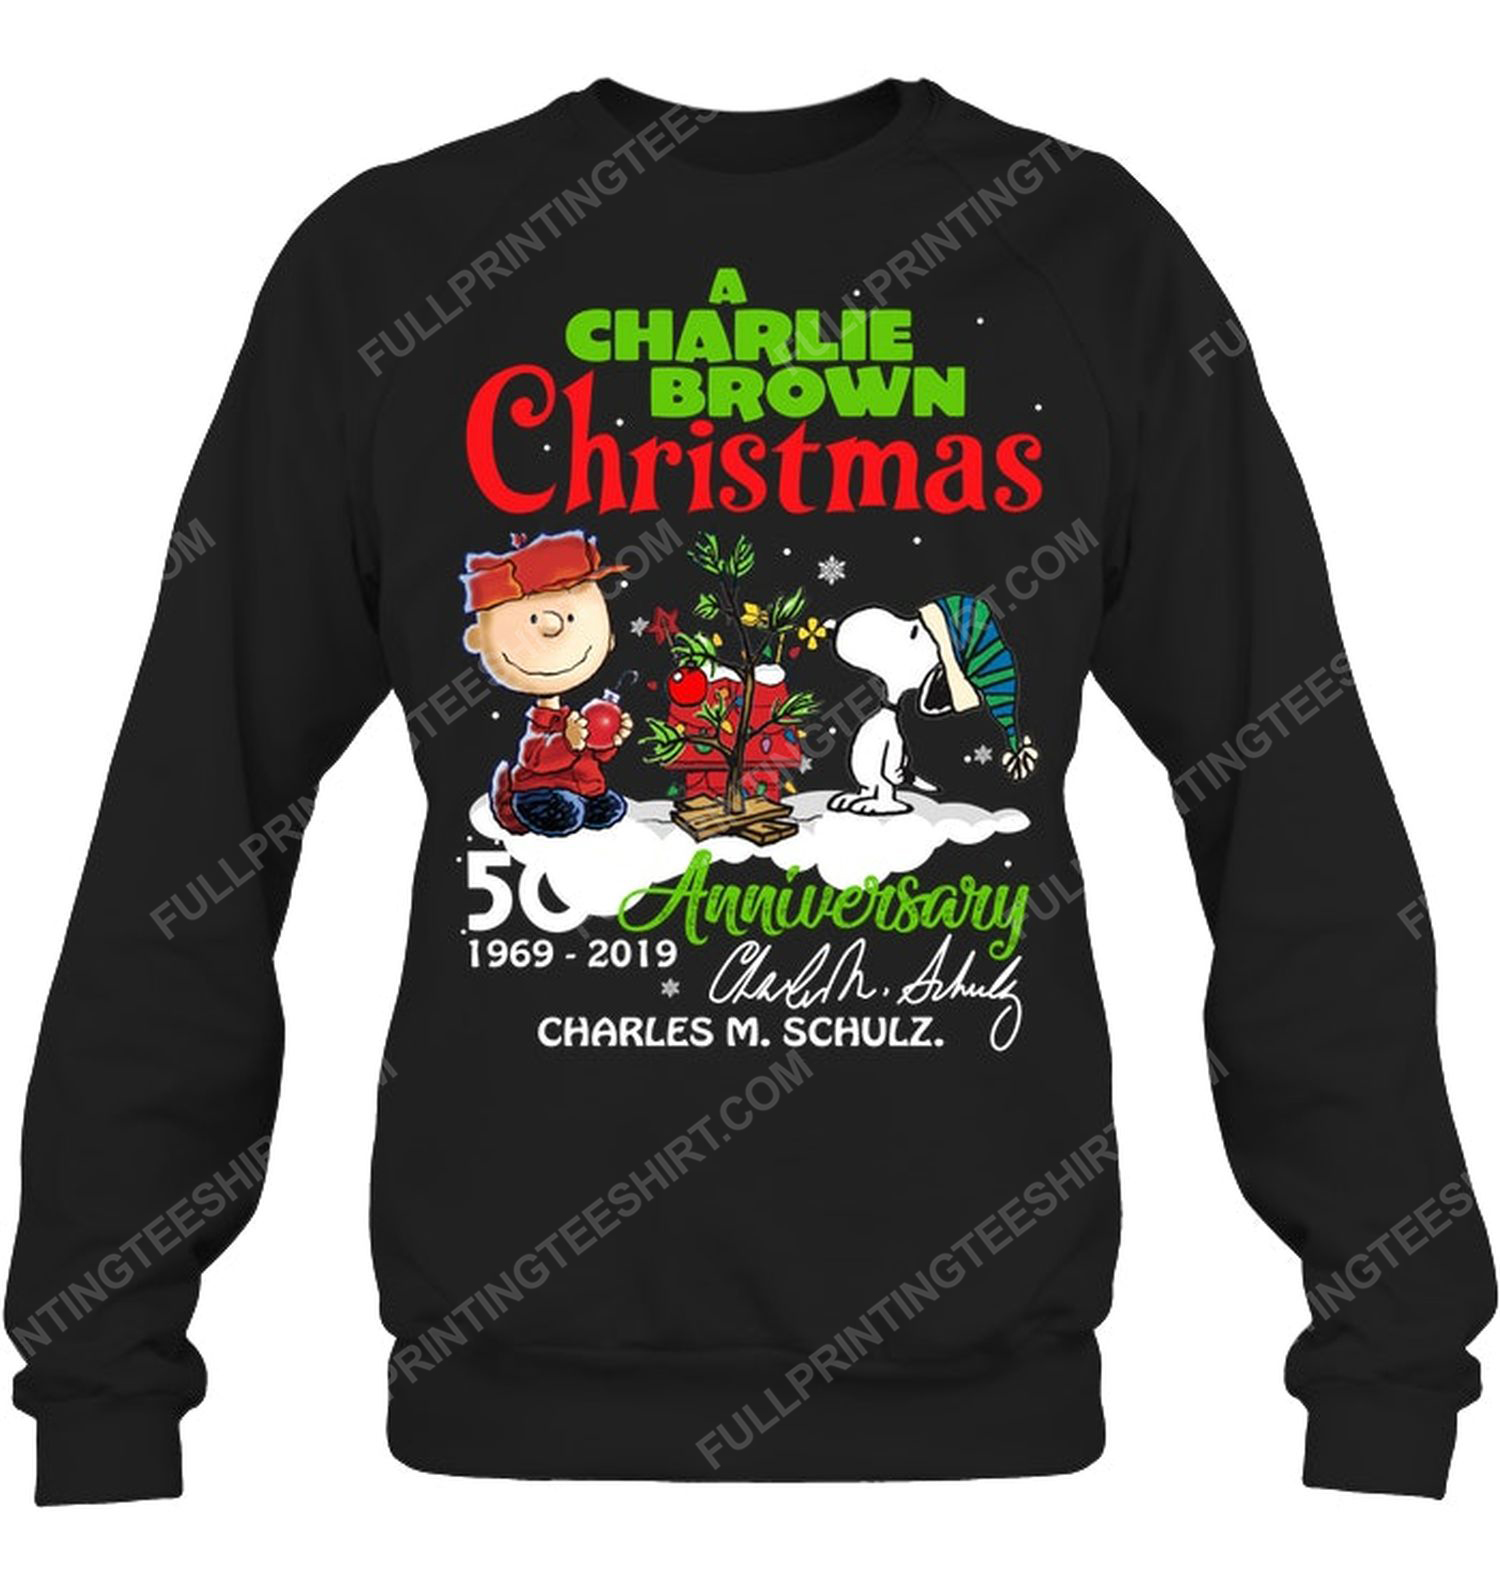 50th anniversary a charlie brown christmas sweatshirt